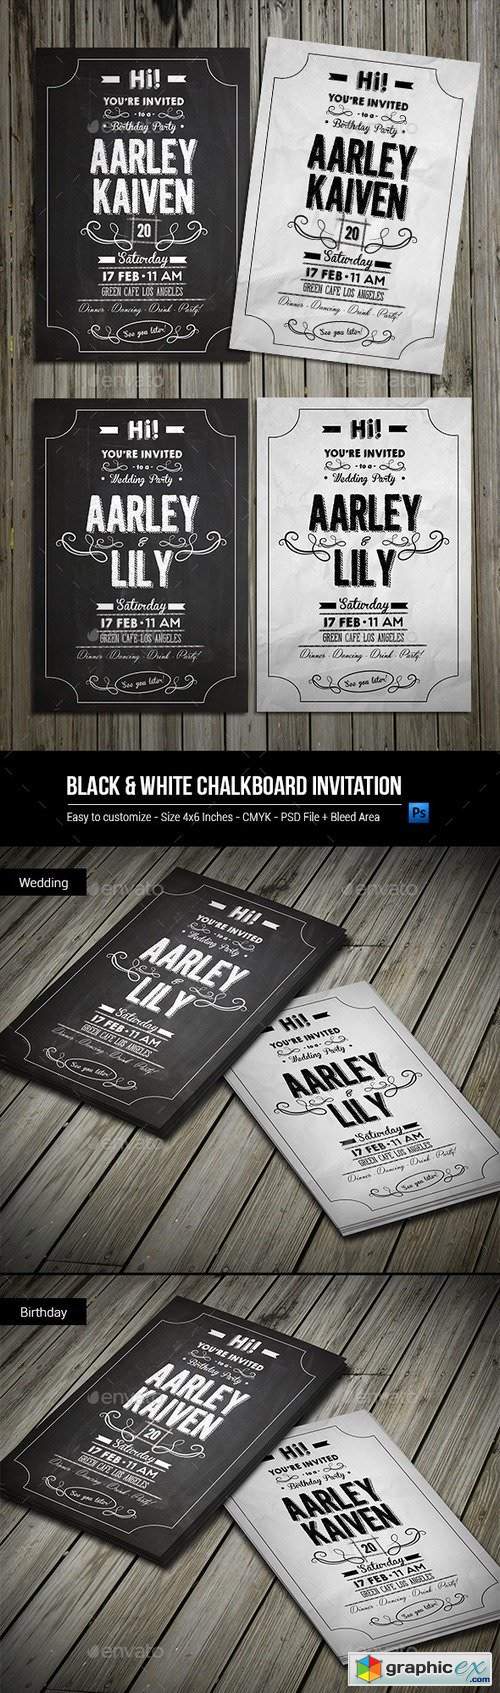 Black & White Chalkboard Invitation